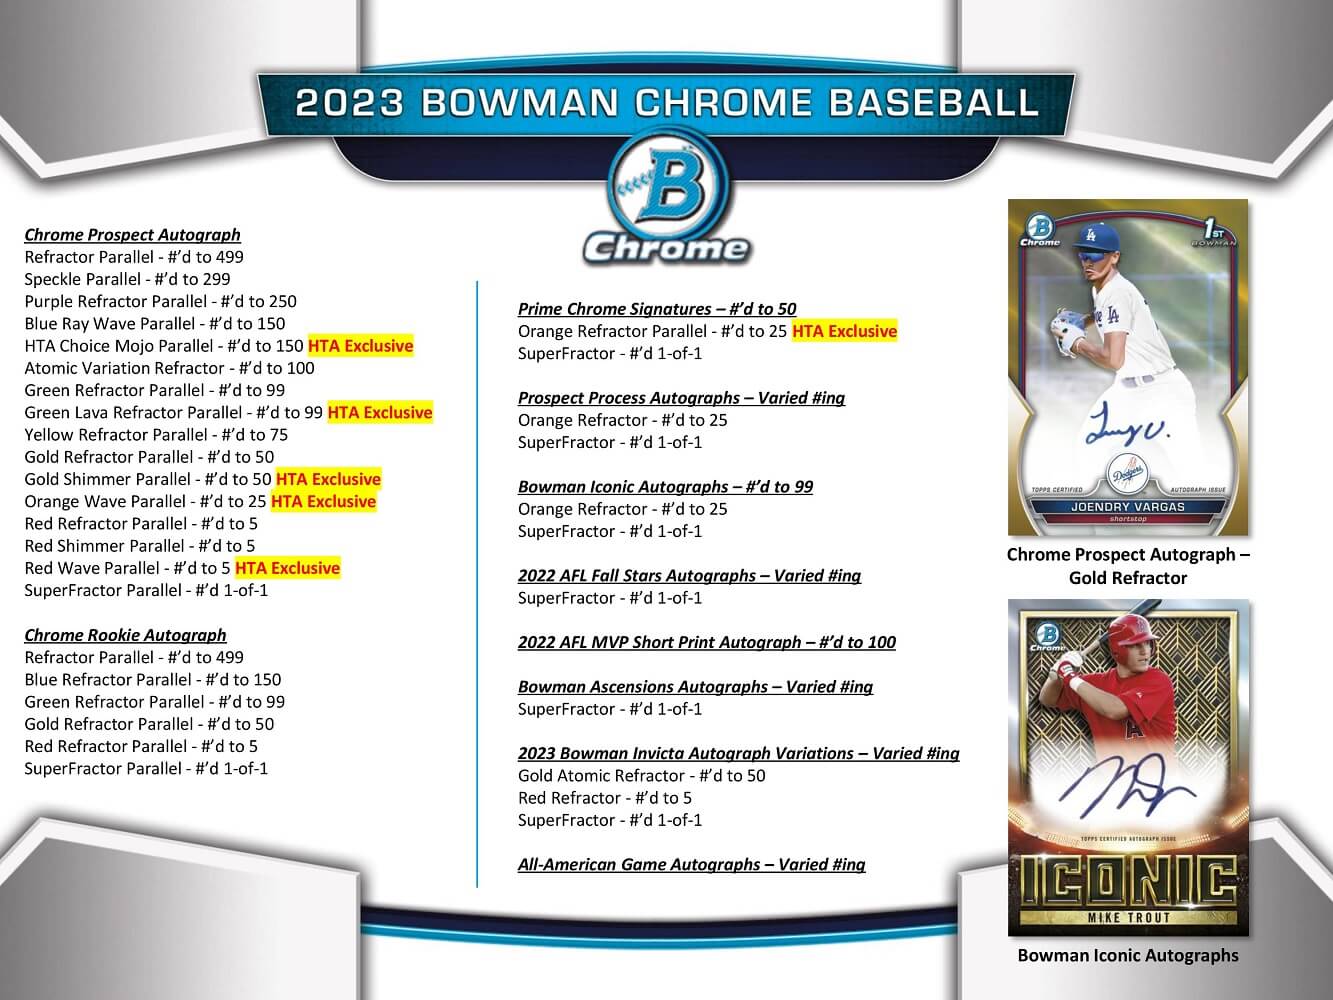 2023 Bowman Chrome Baseball Preview